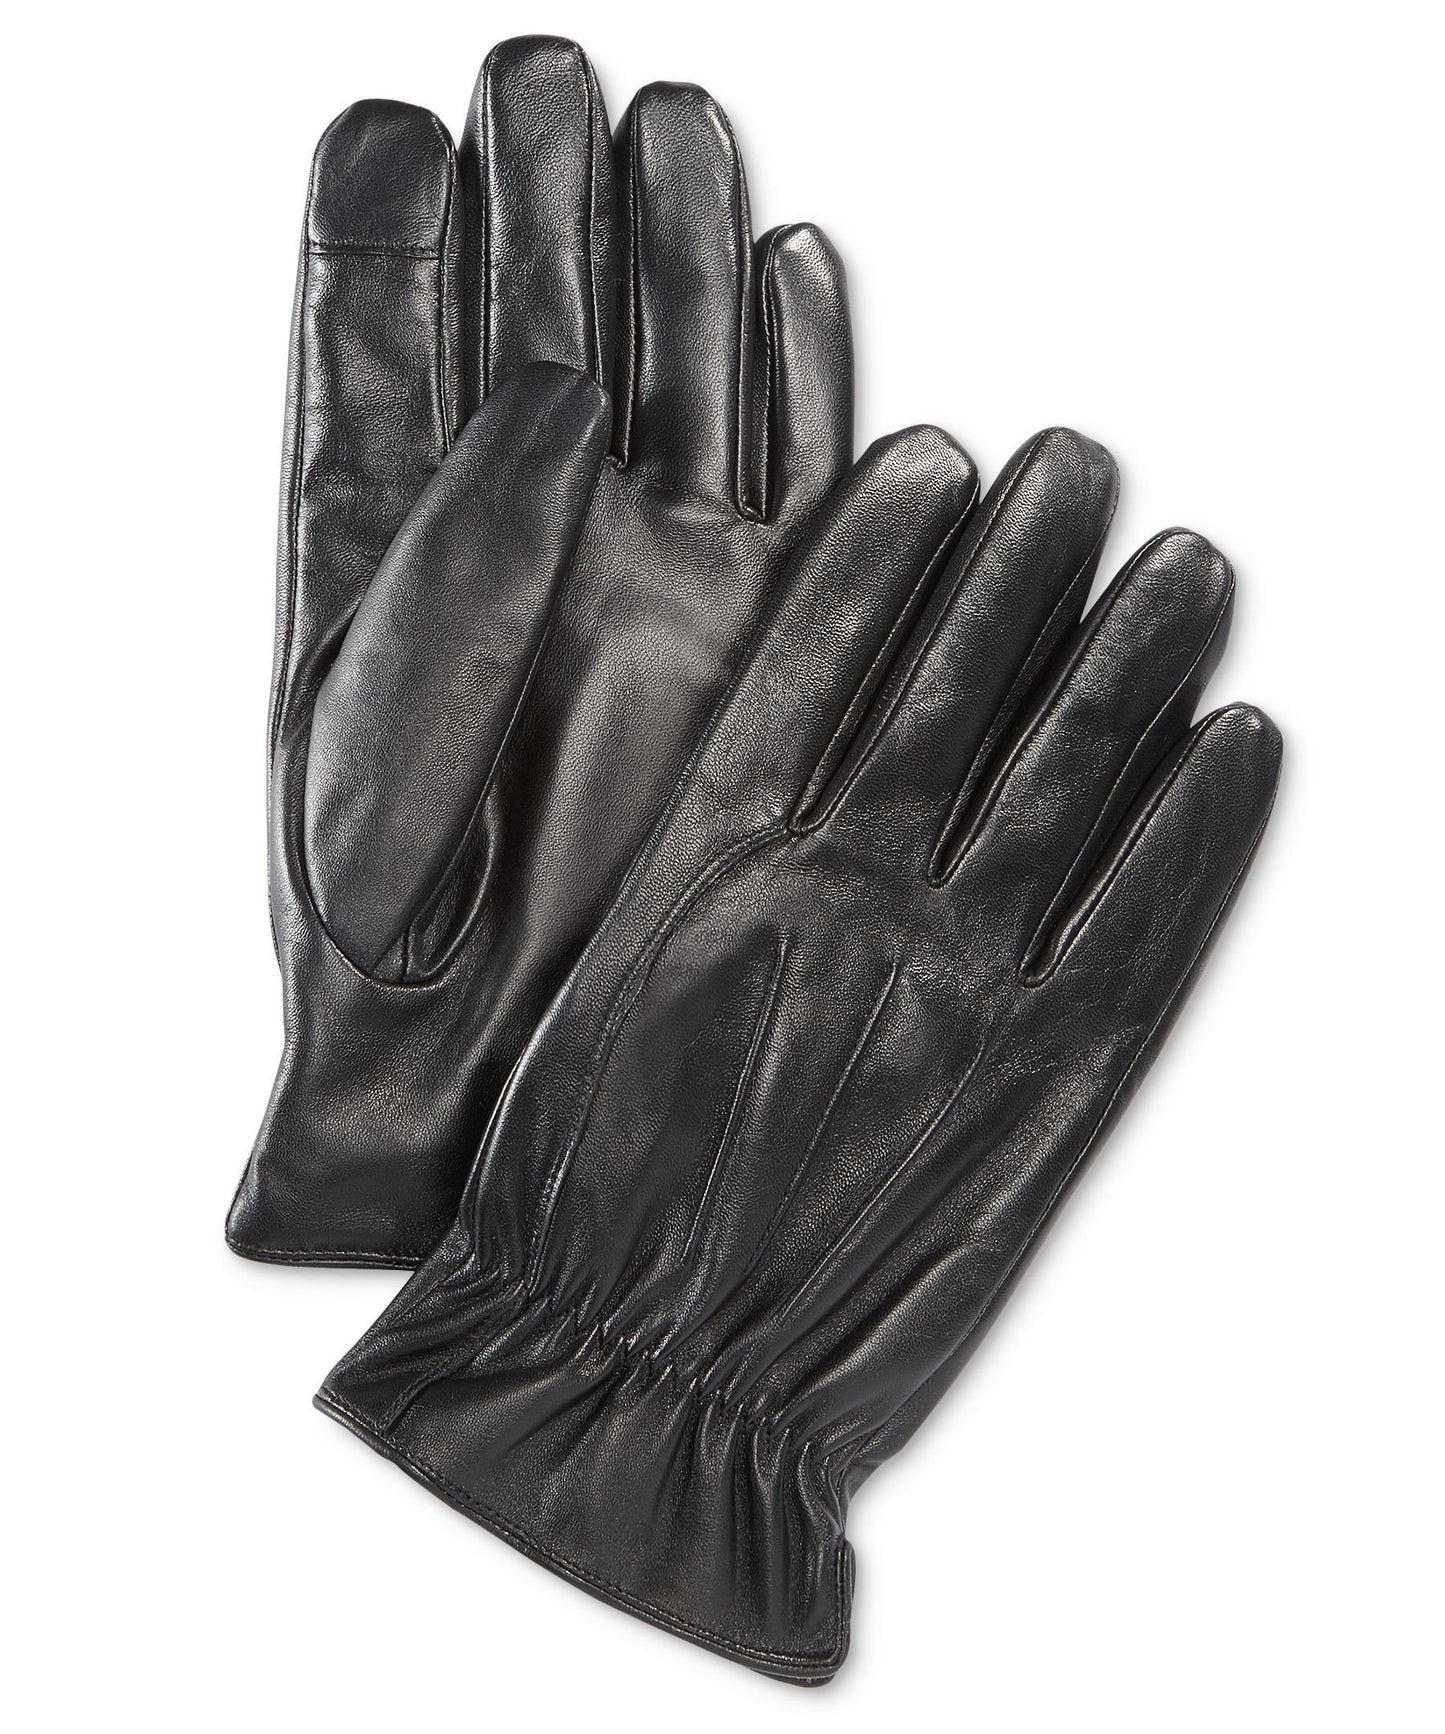 Ryan Seacrest Distinction Leather Intelitouch Gloves 001 XL